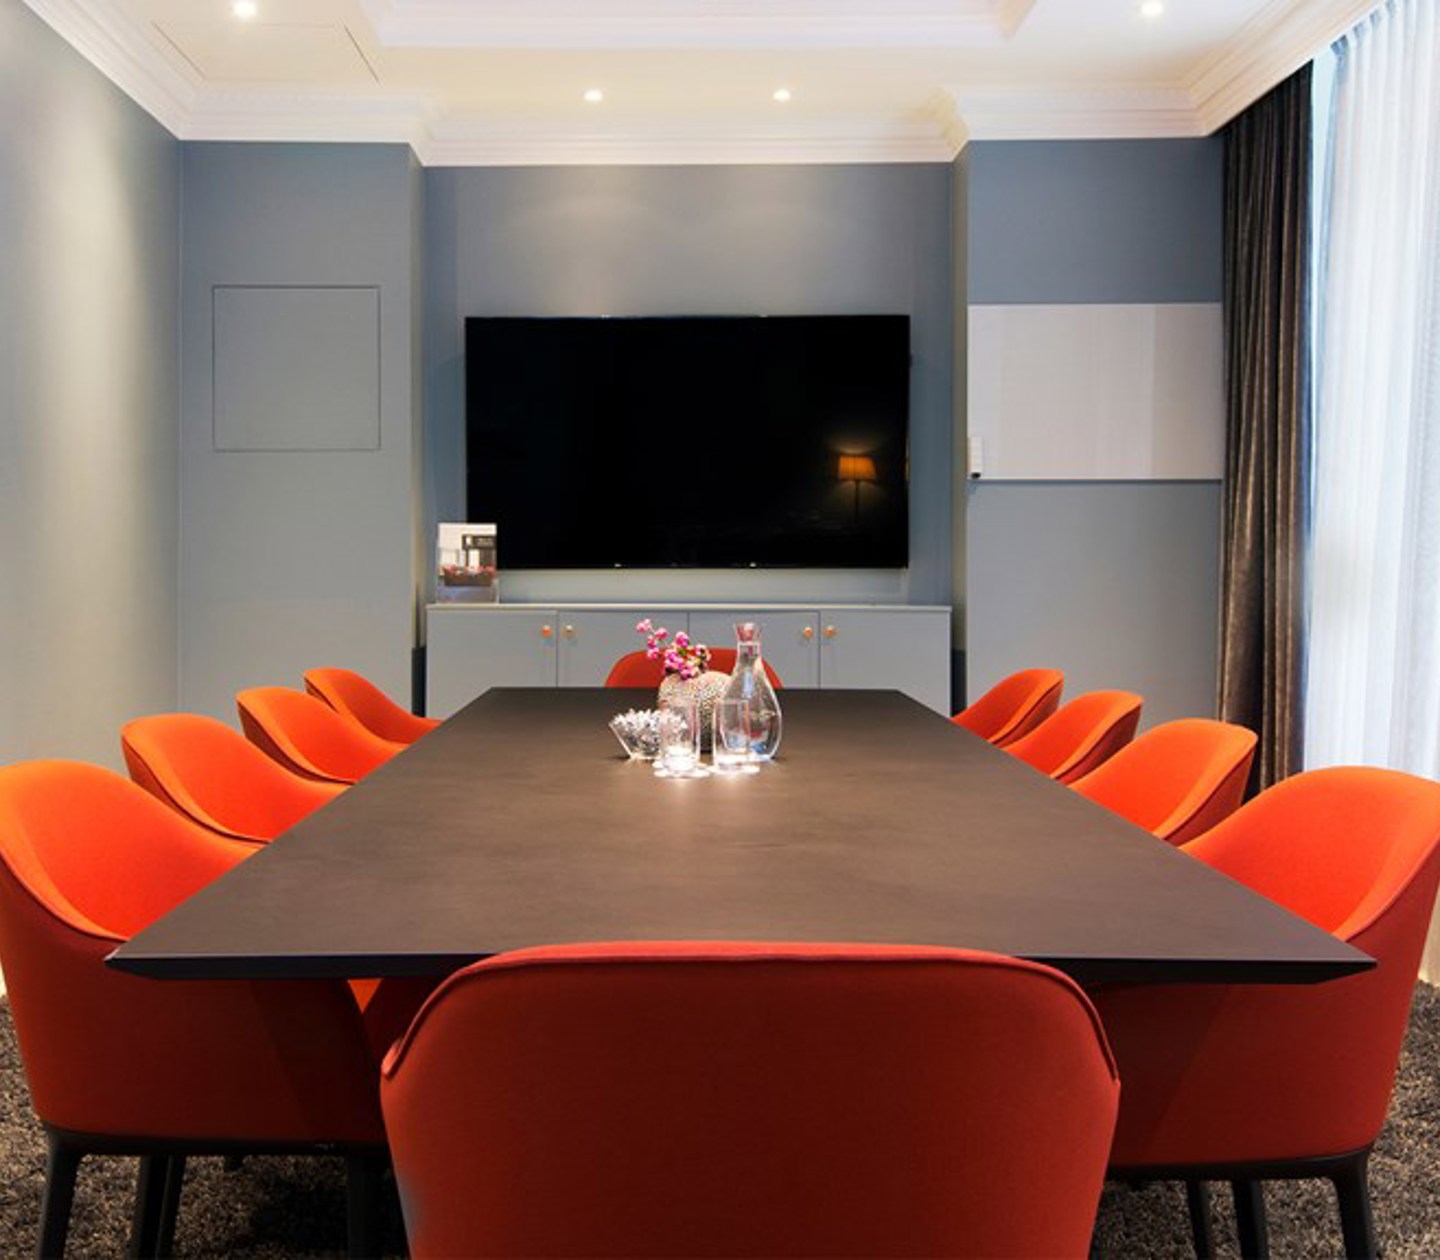 Konferensrum med orangea stolar